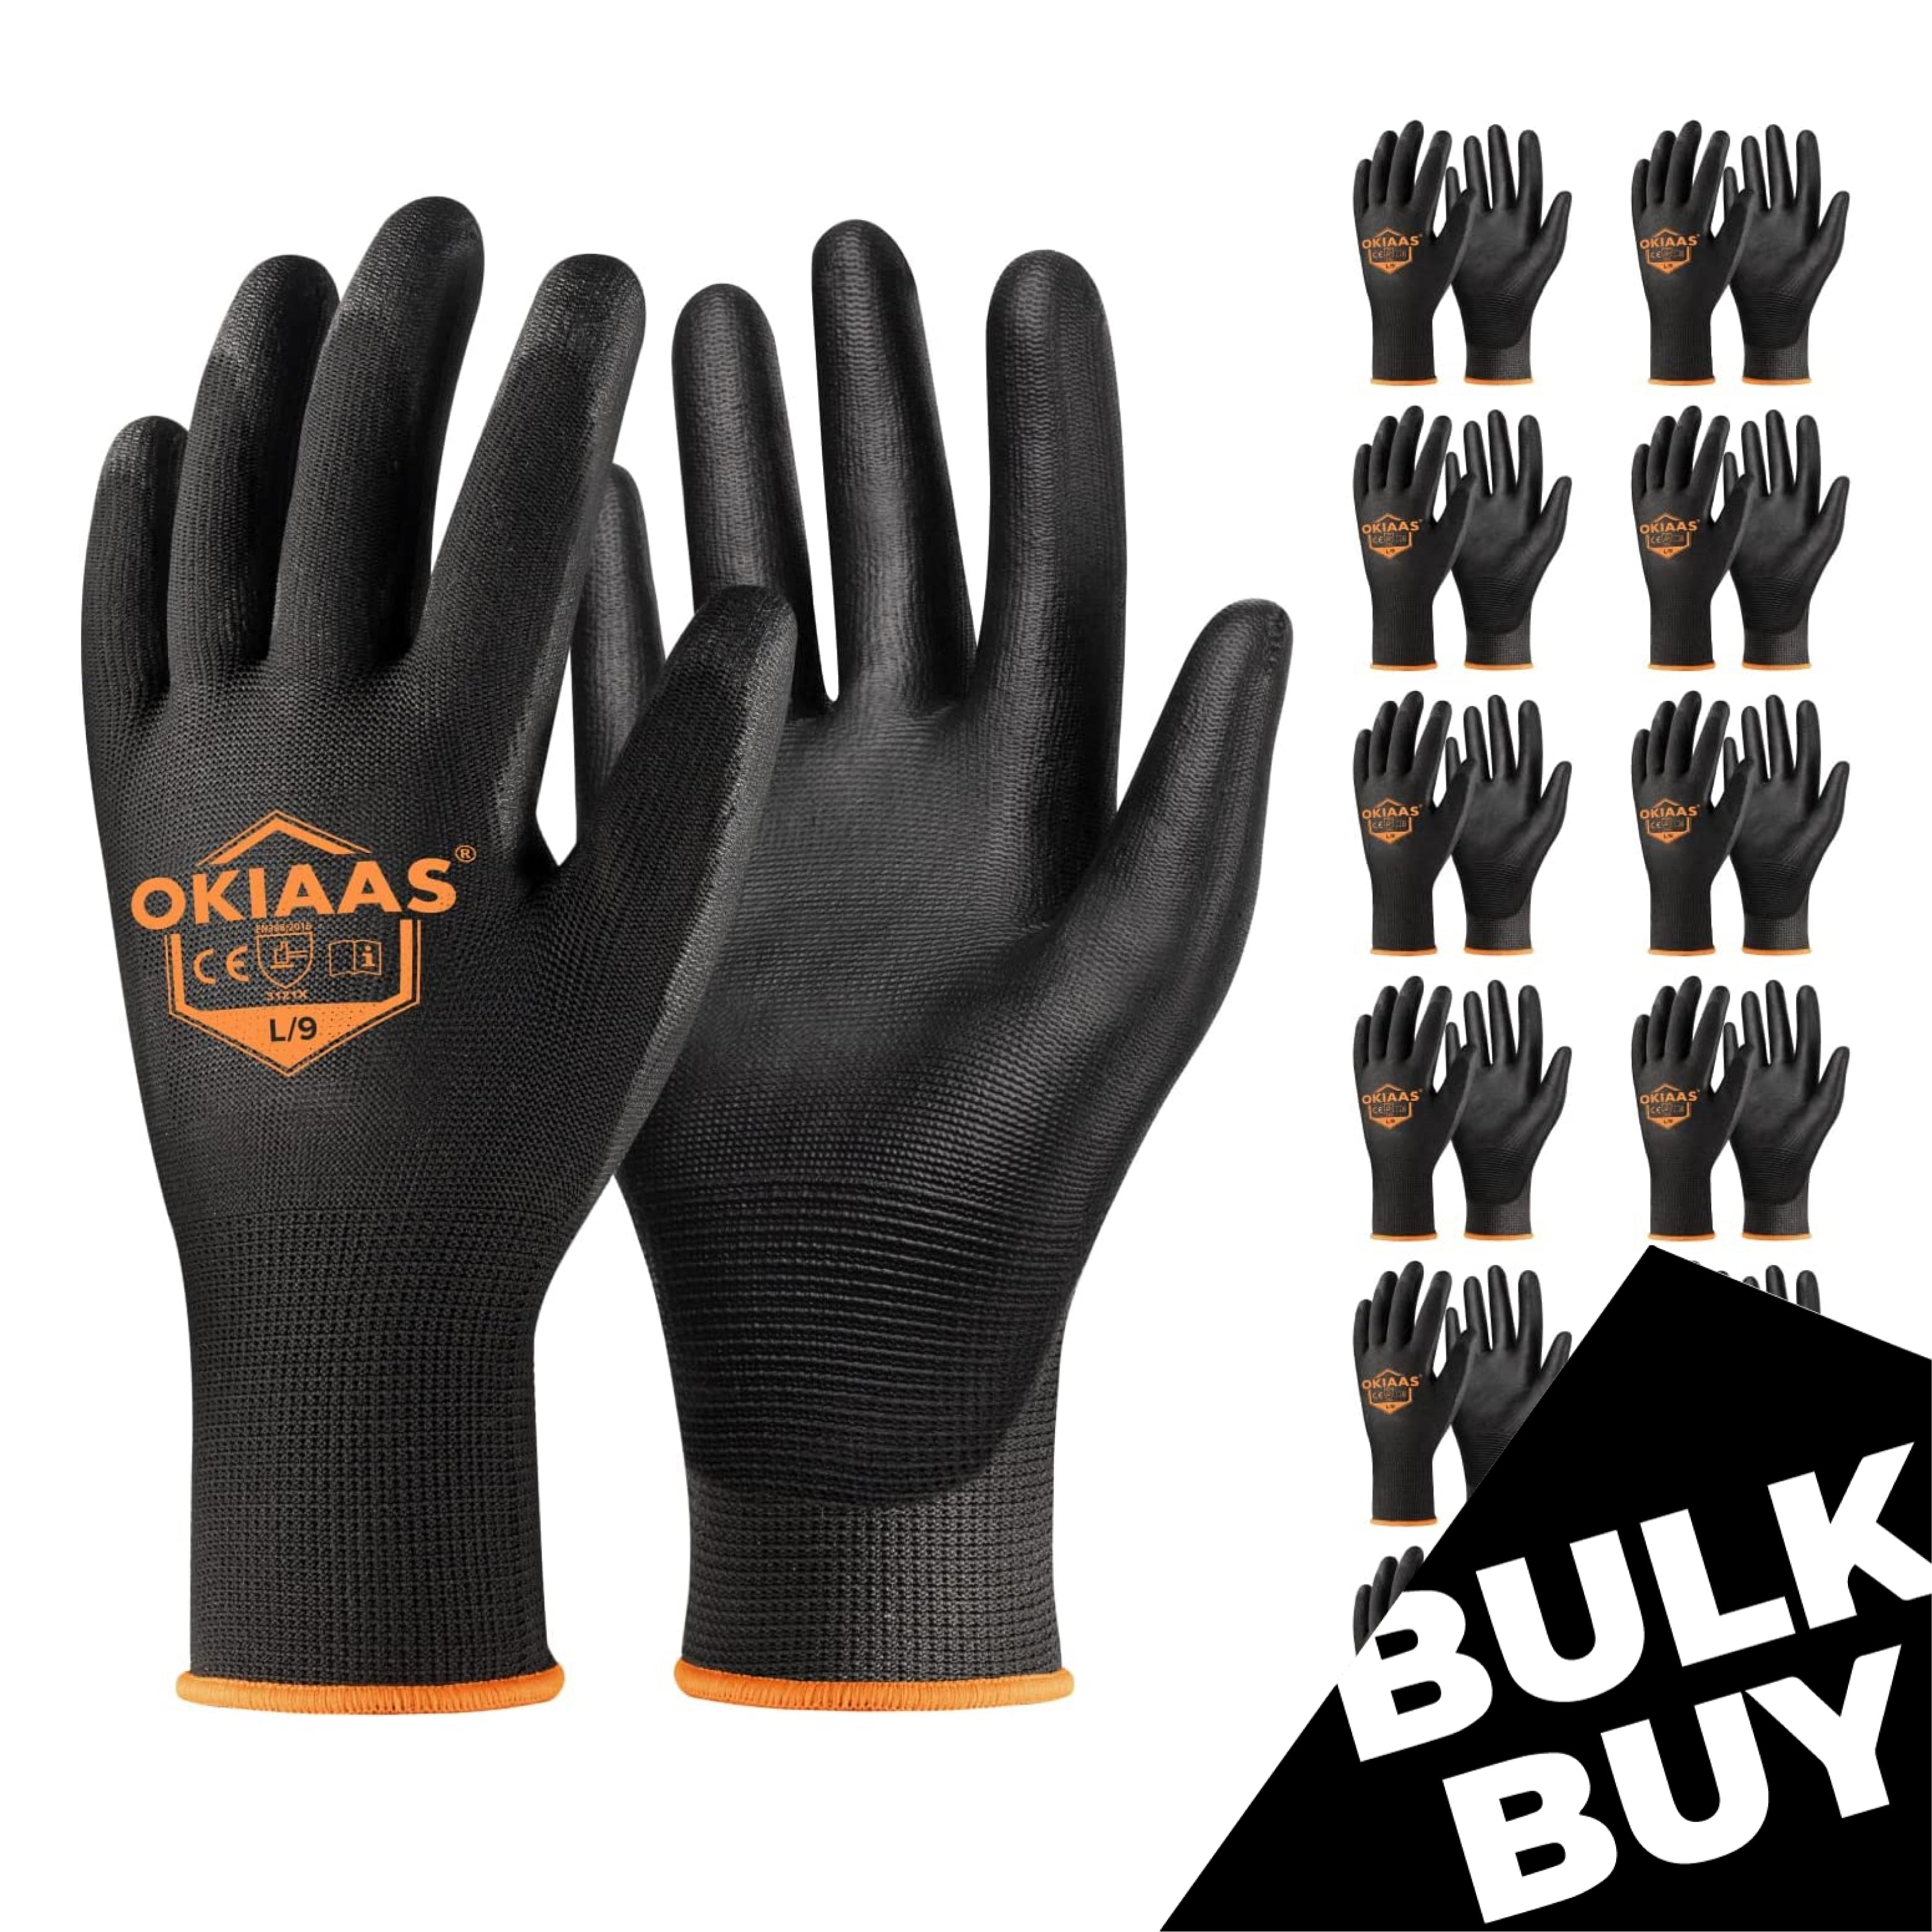 Gray Polyurethane Dipped Gloves